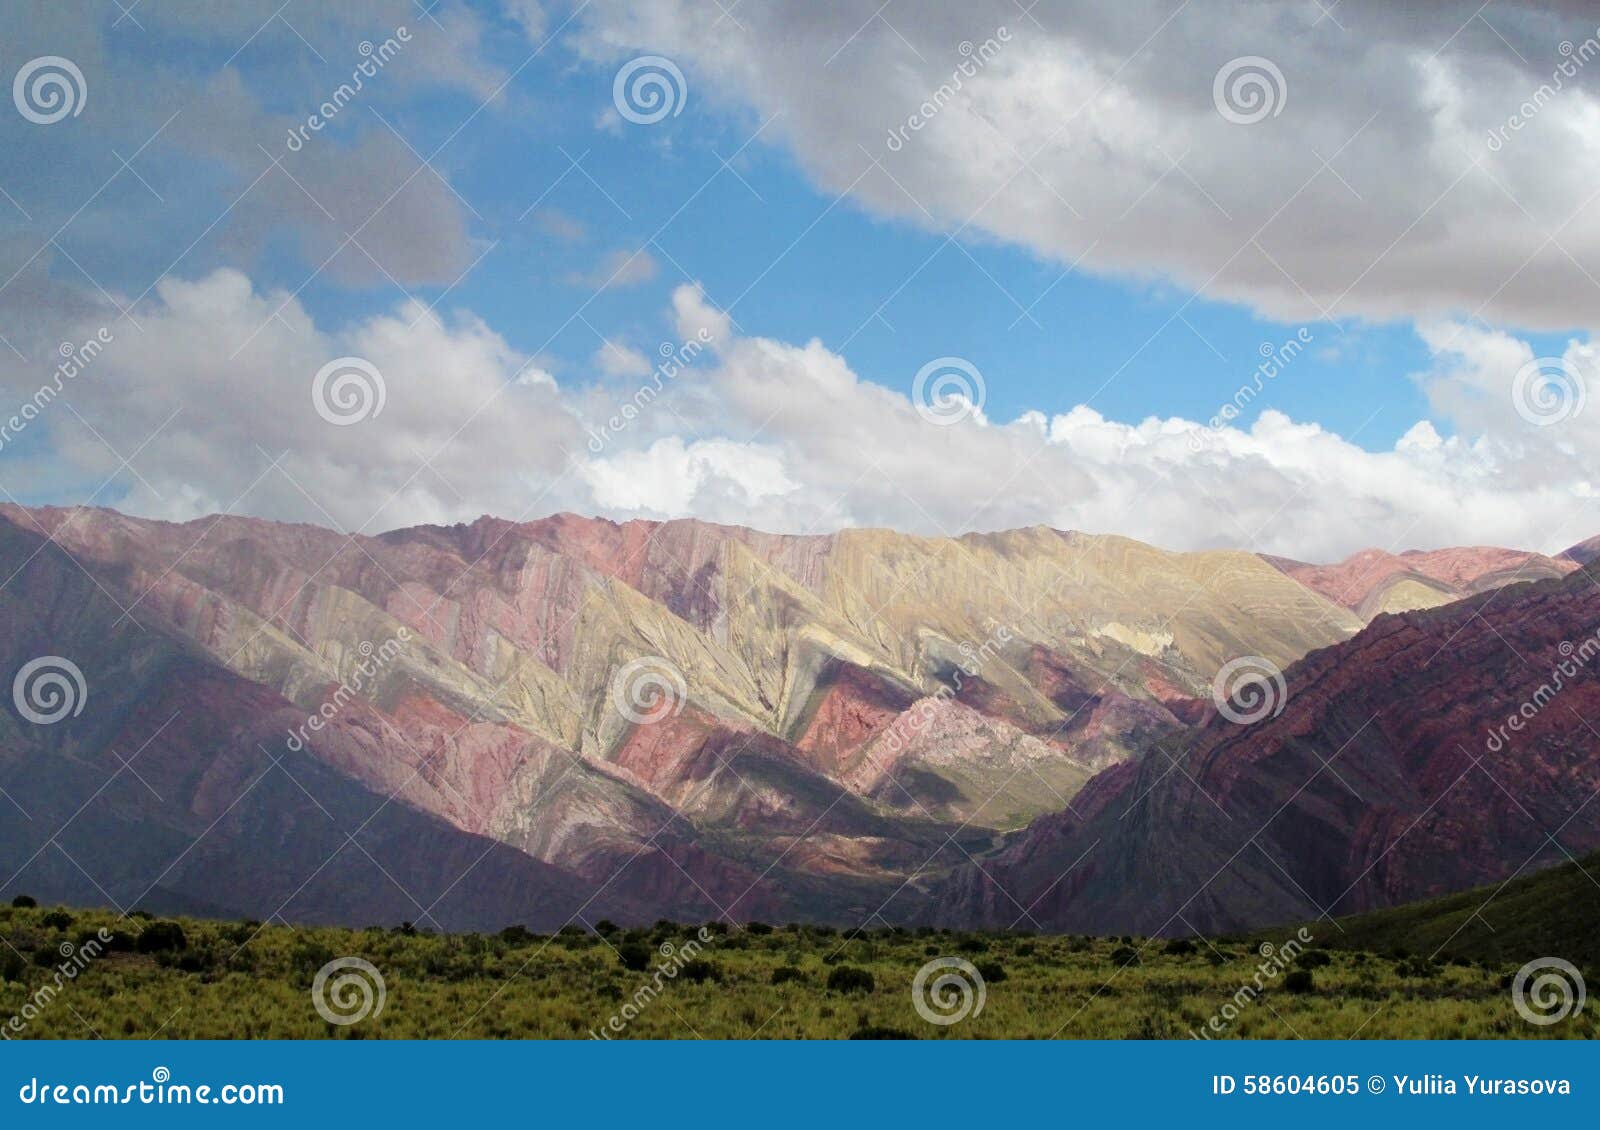 cerro de siete colores, red color mountains